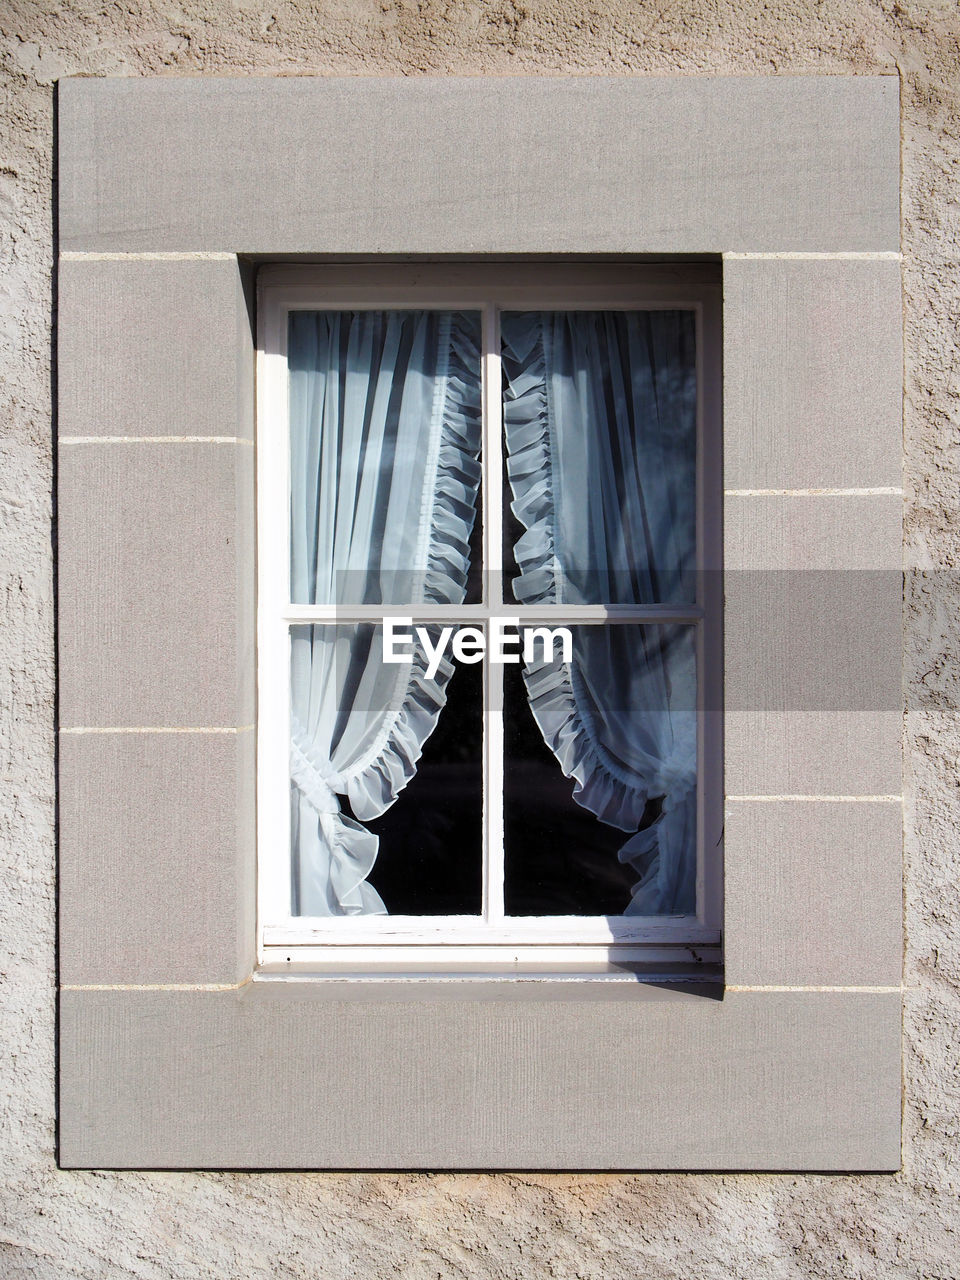 Curtain on window of house